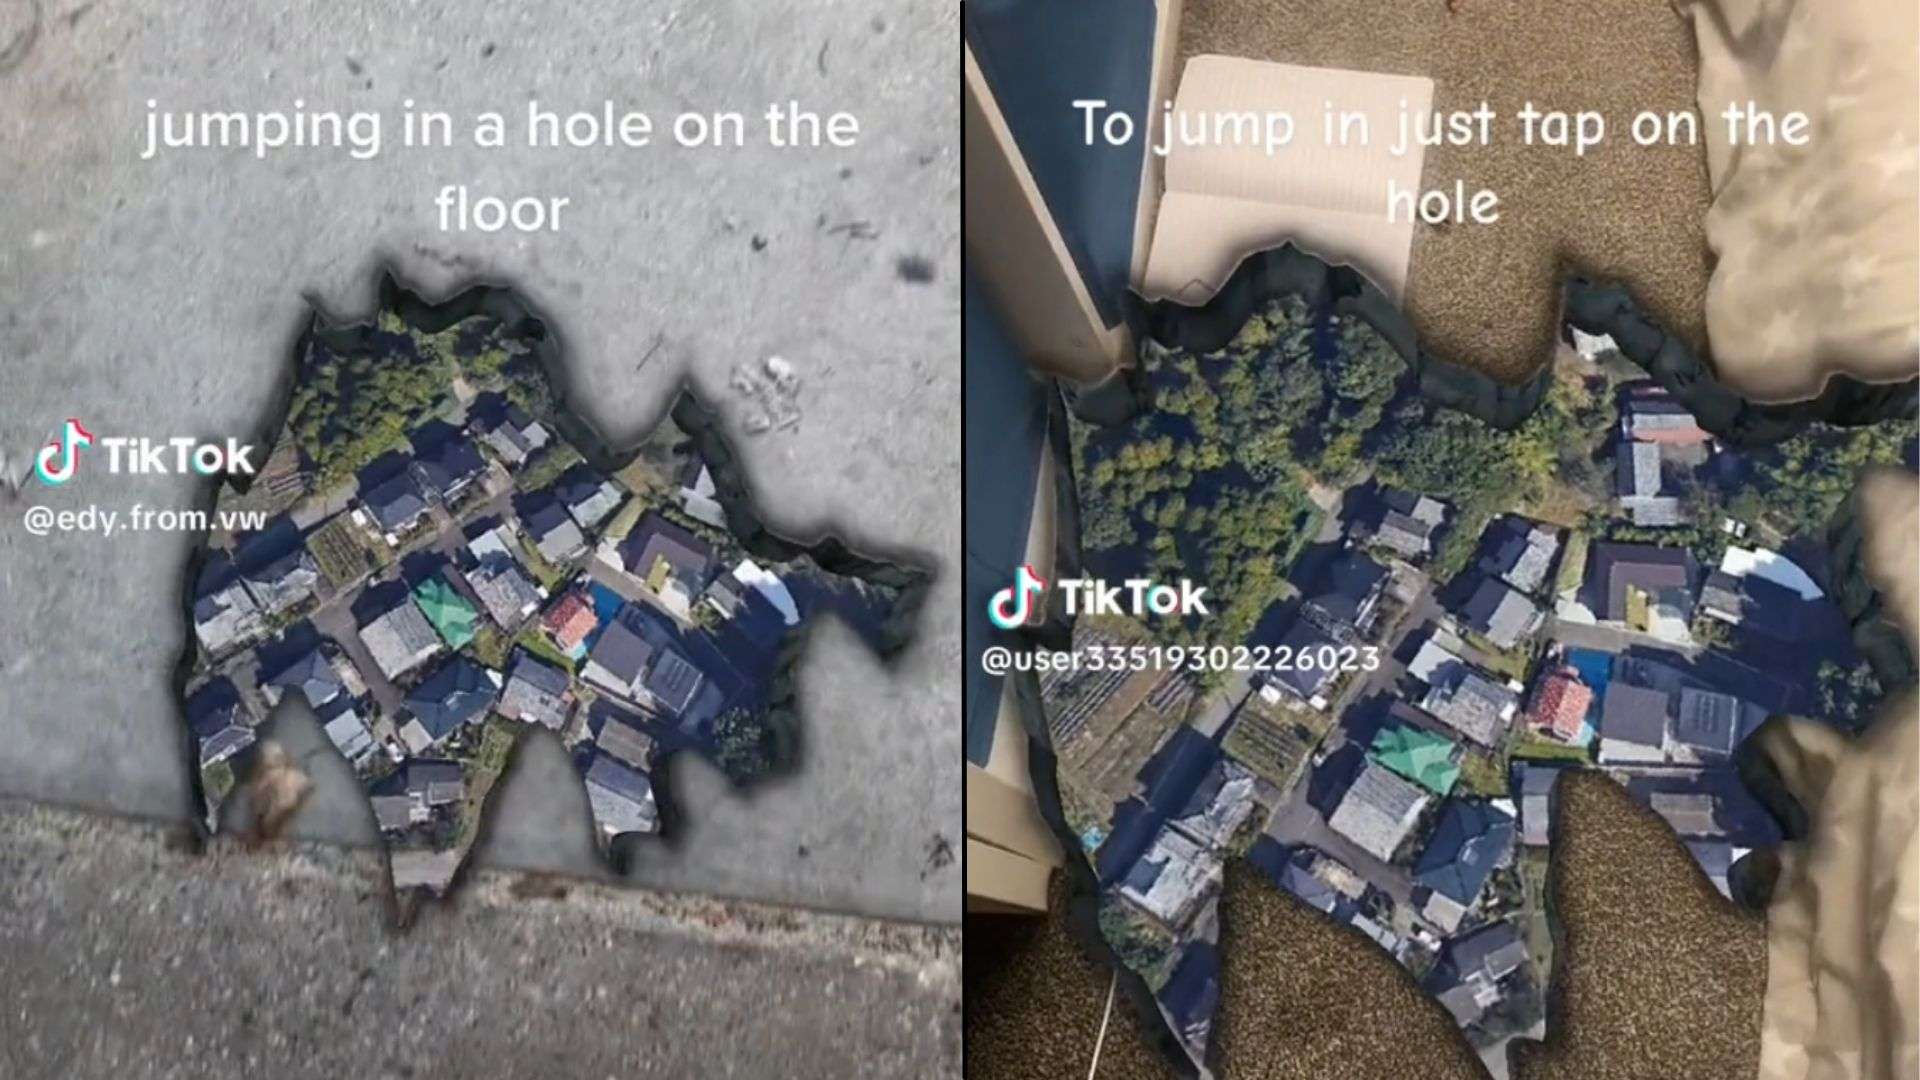 TikTok screenshots from hole in the floor trend